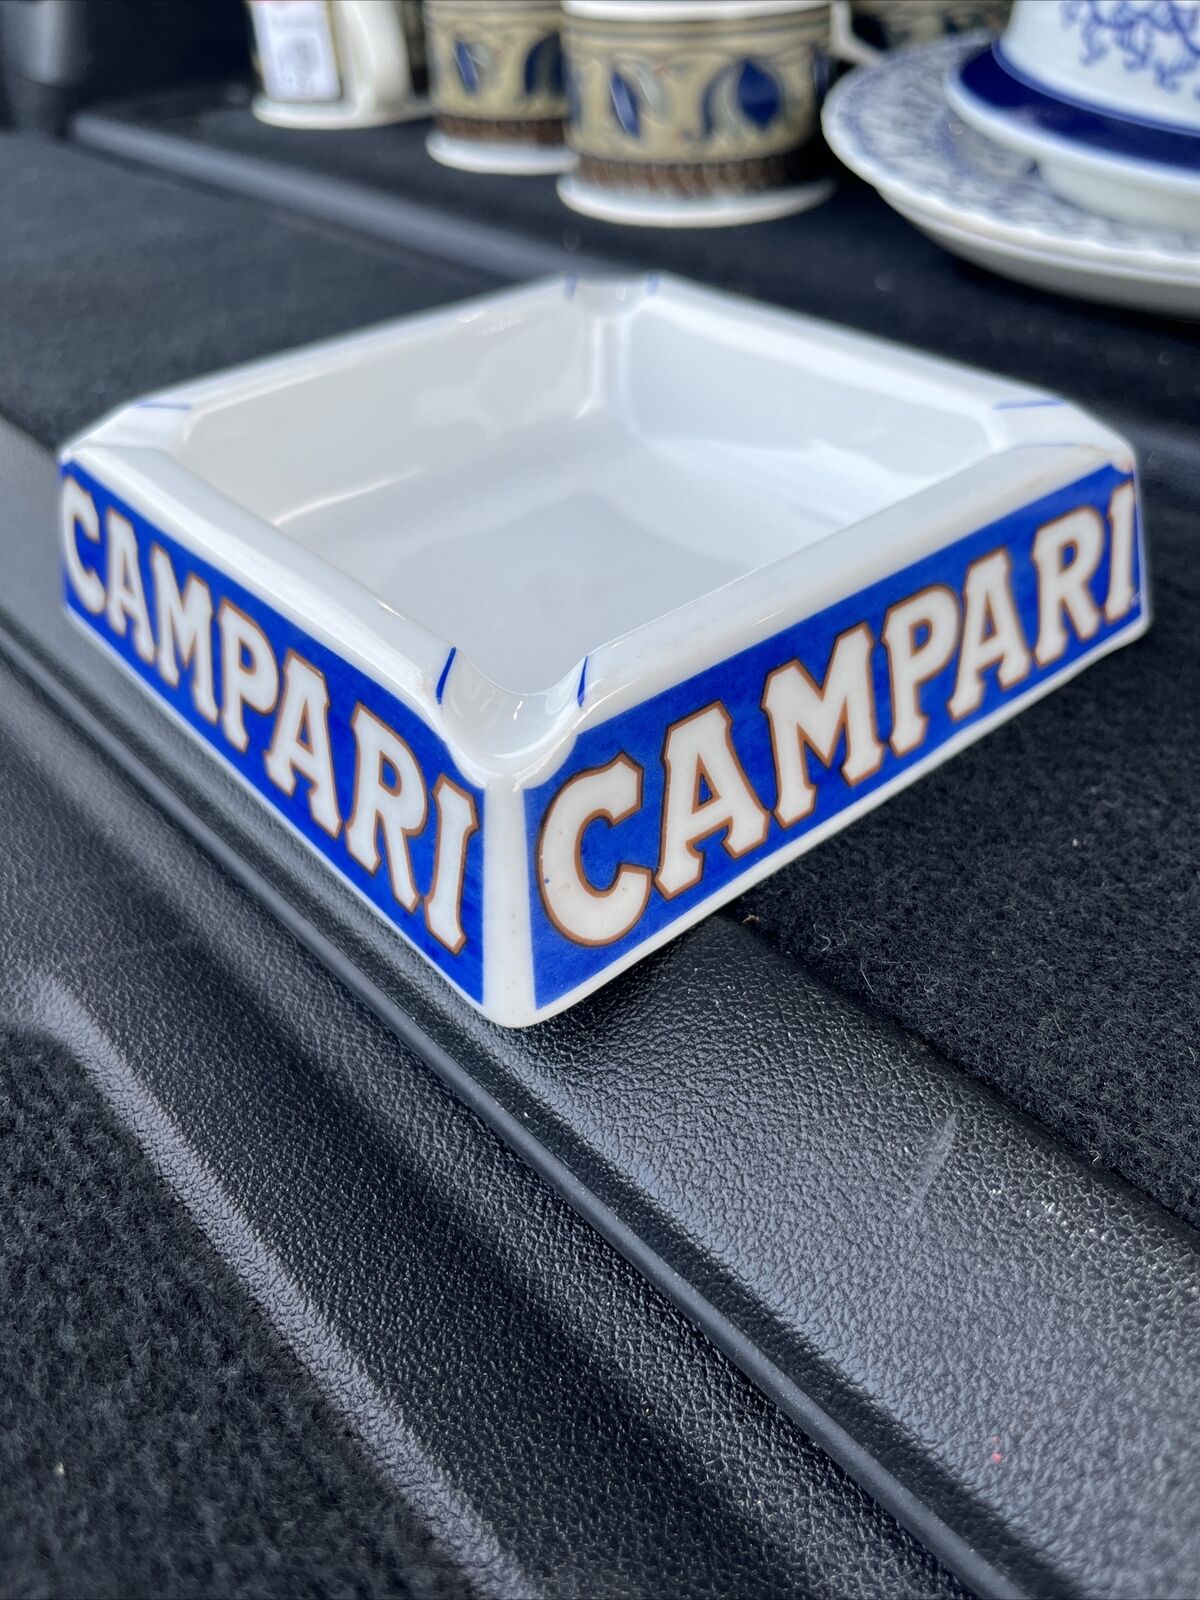 Vintage 1960’s Mid-Century Campari Italy Ceramic Ashtray